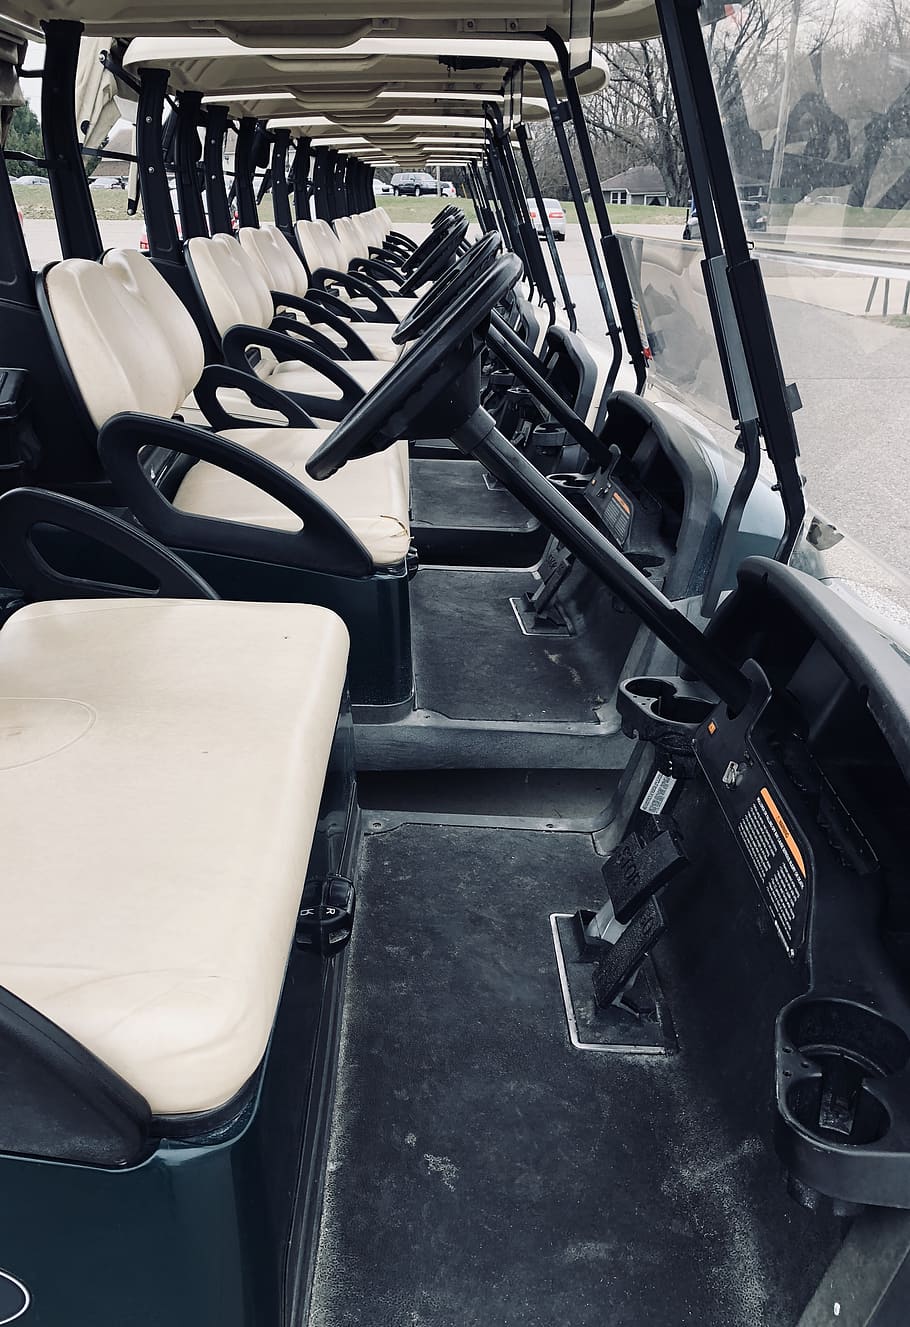 golf, golf cart, spring, sports, wheel, seat, in a row, empty